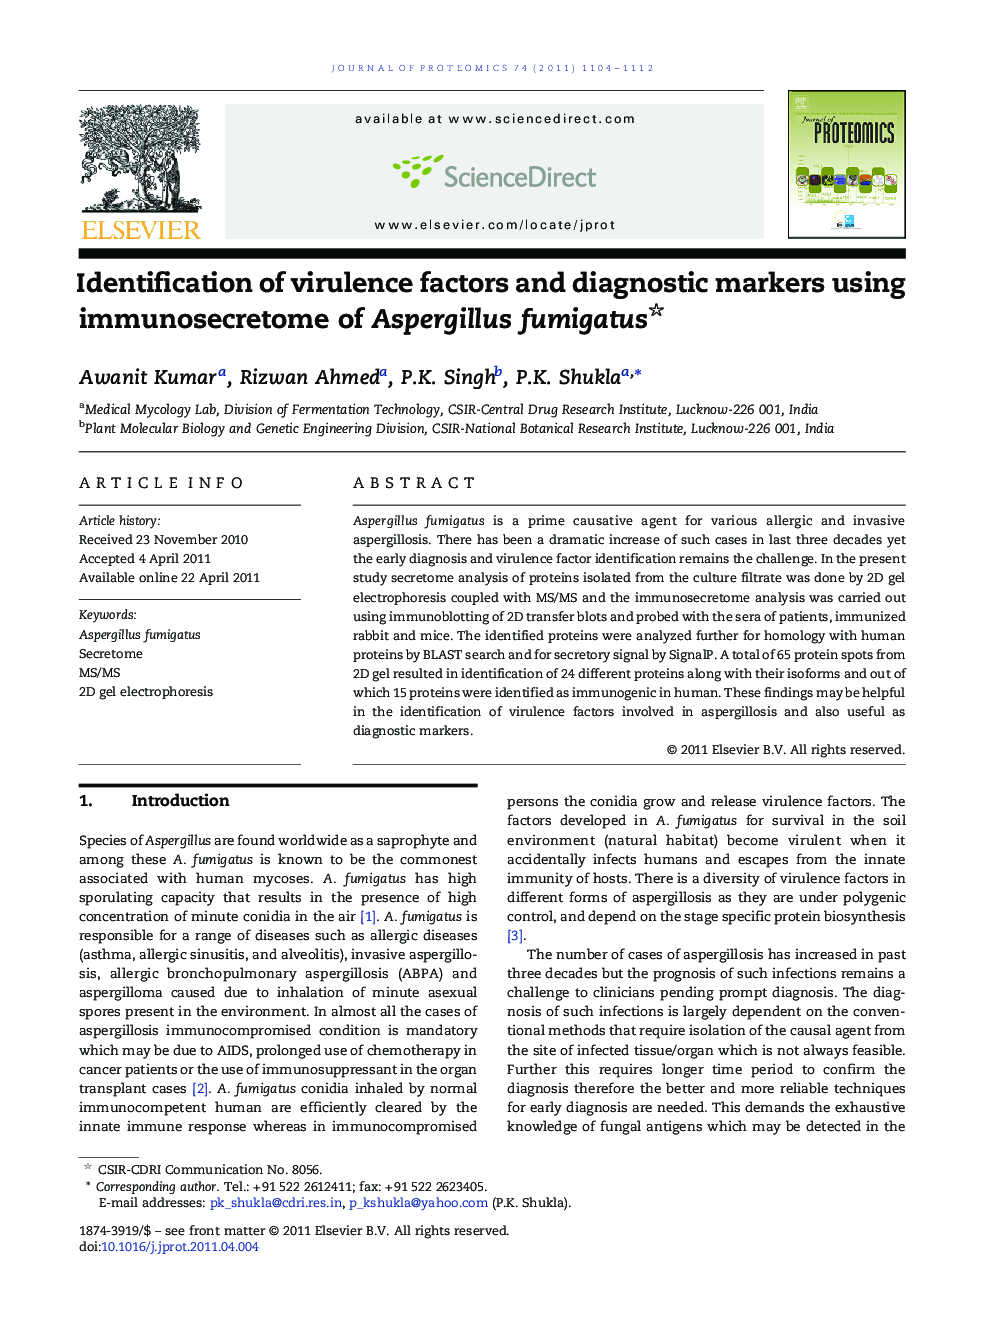 Identification of virulence factors and diagnostic markers using immunosecretome of Aspergillus fumigatus 